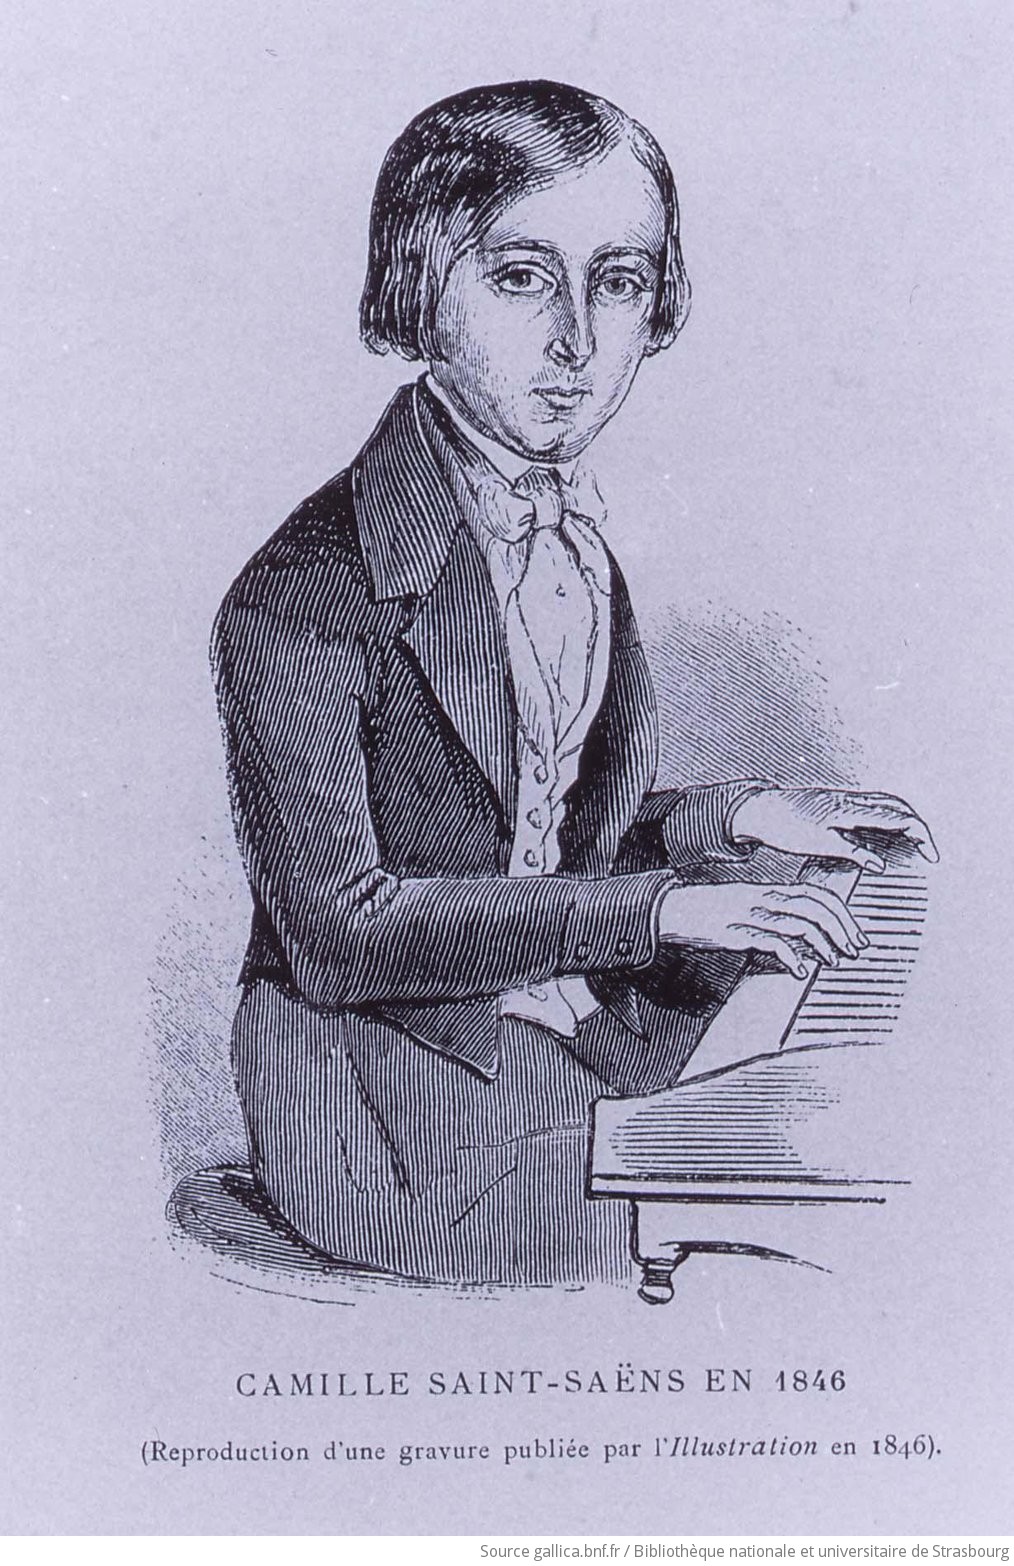 Camille Saint-Saëns en 1846